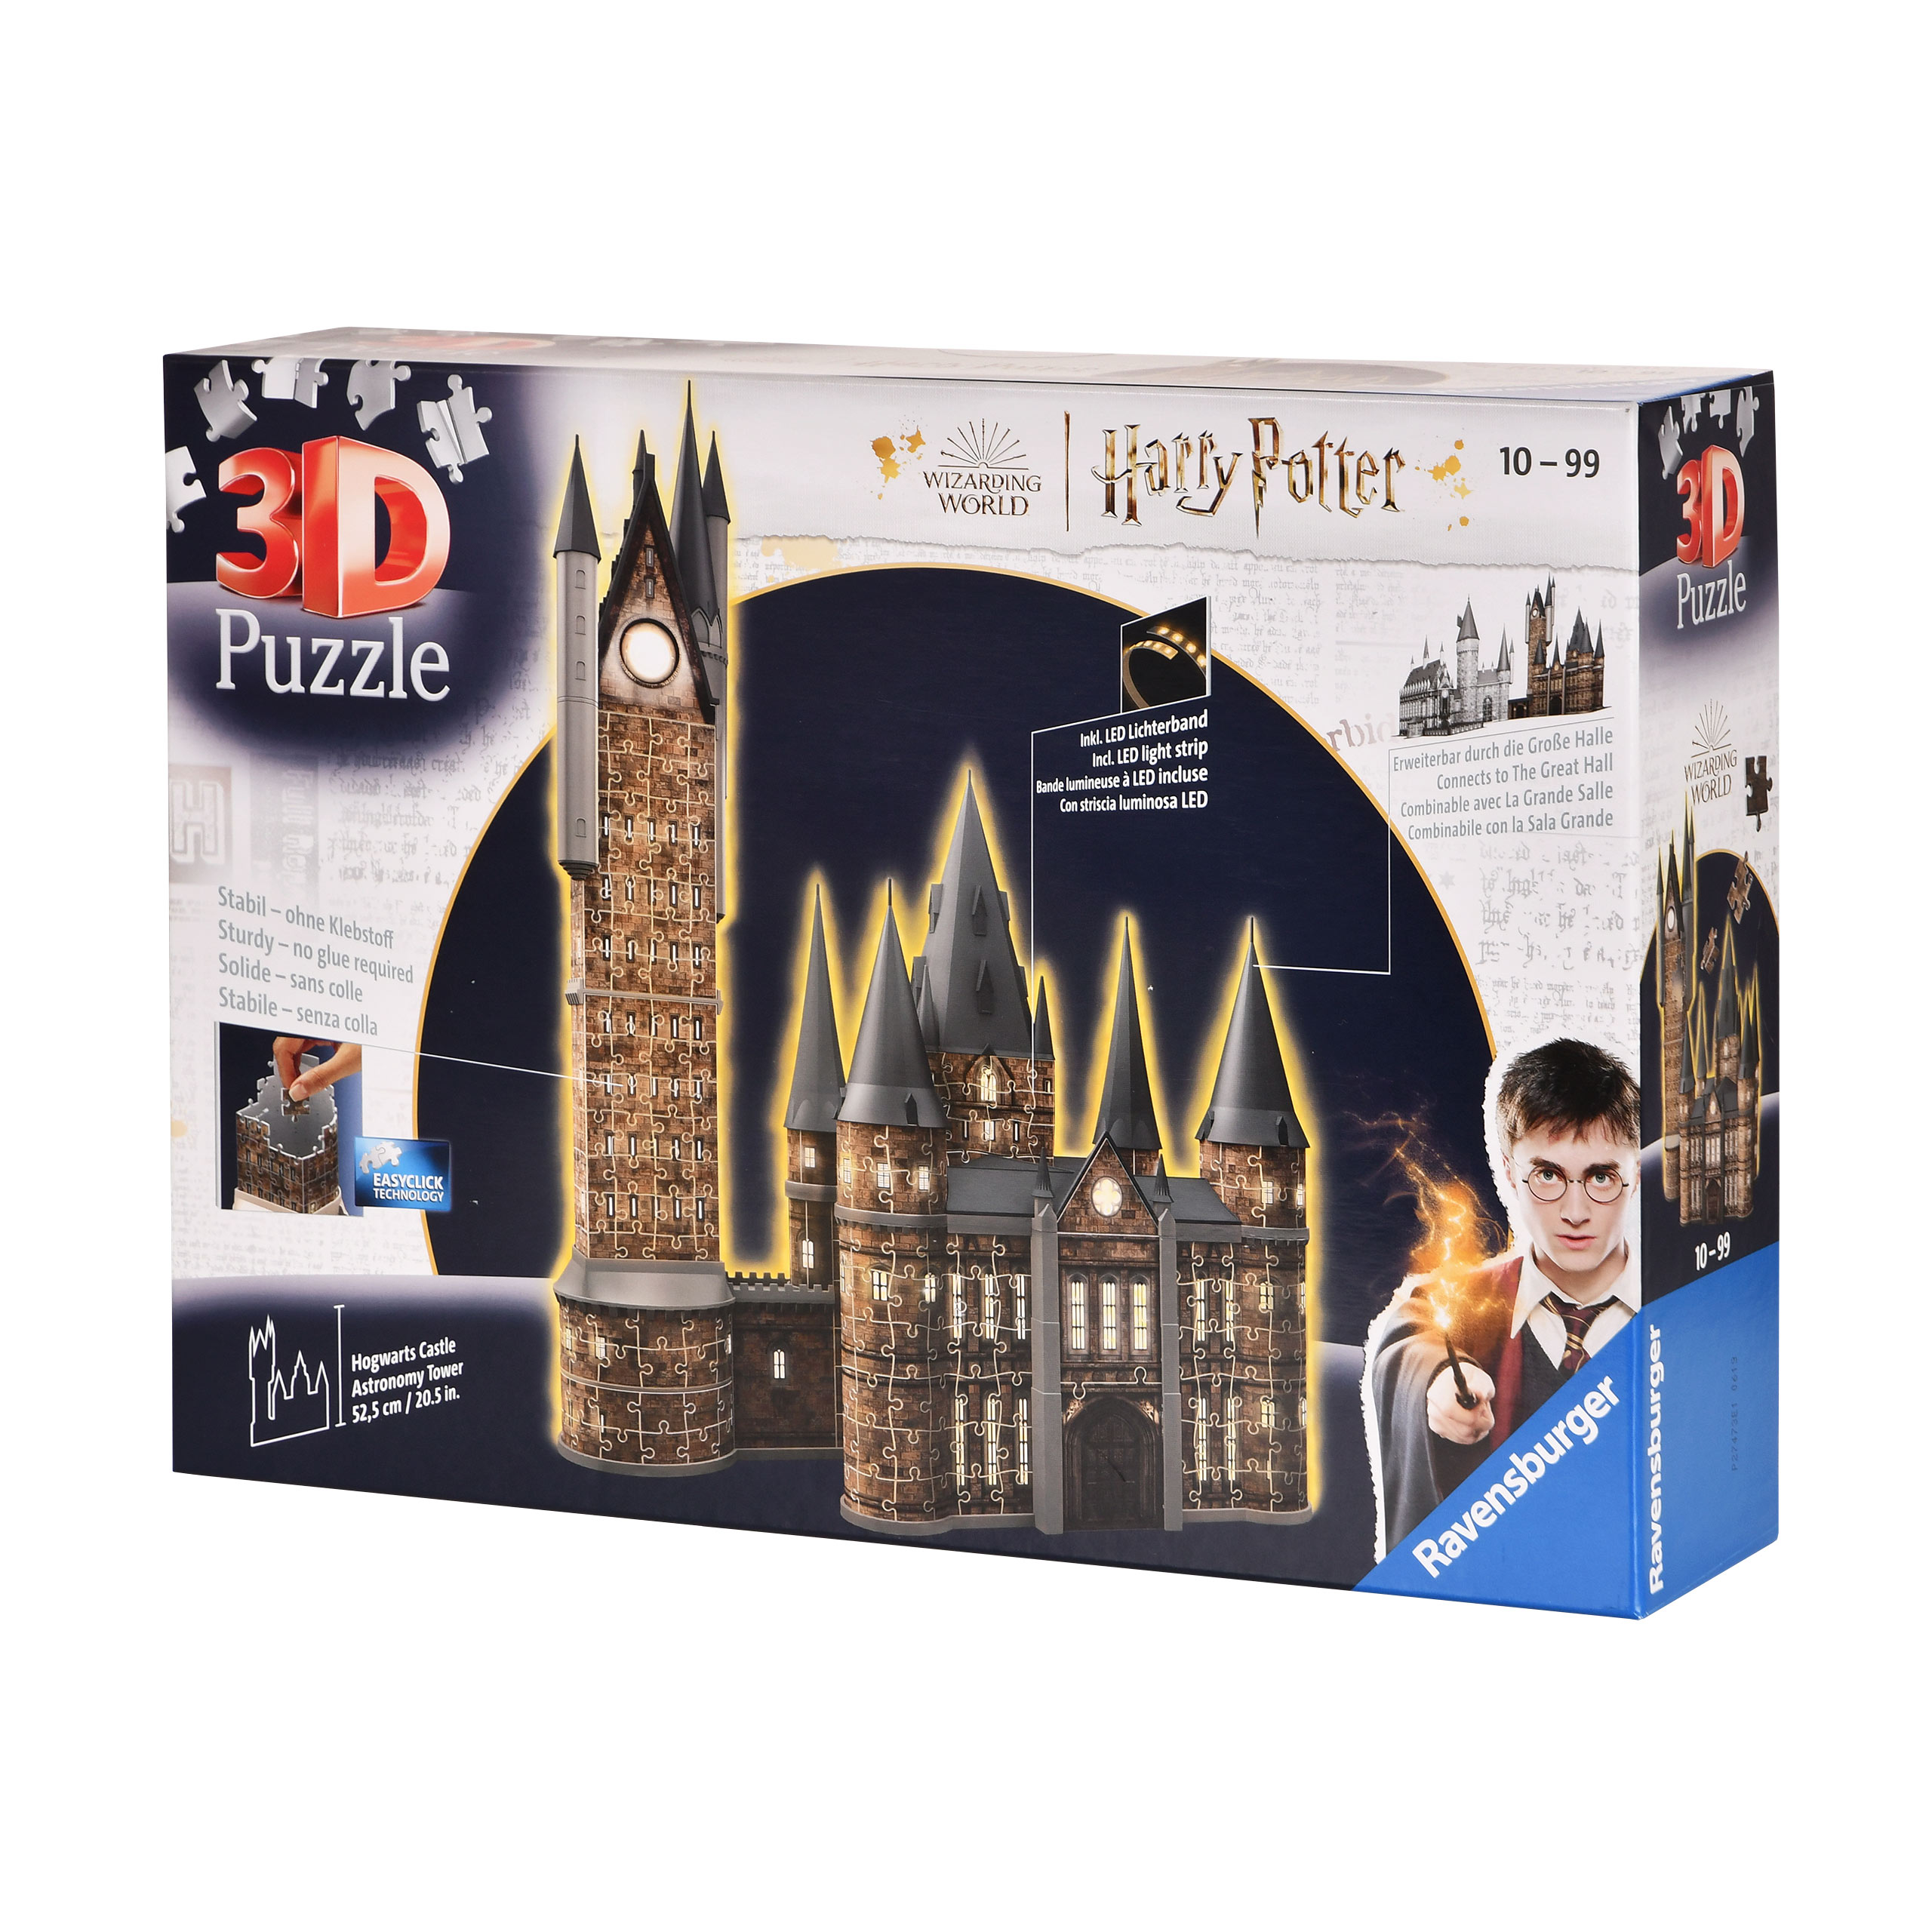 Hogwarts Schloss Astronomie-Turm 3D Puzzle mit Beleuchtung - Harry Potter